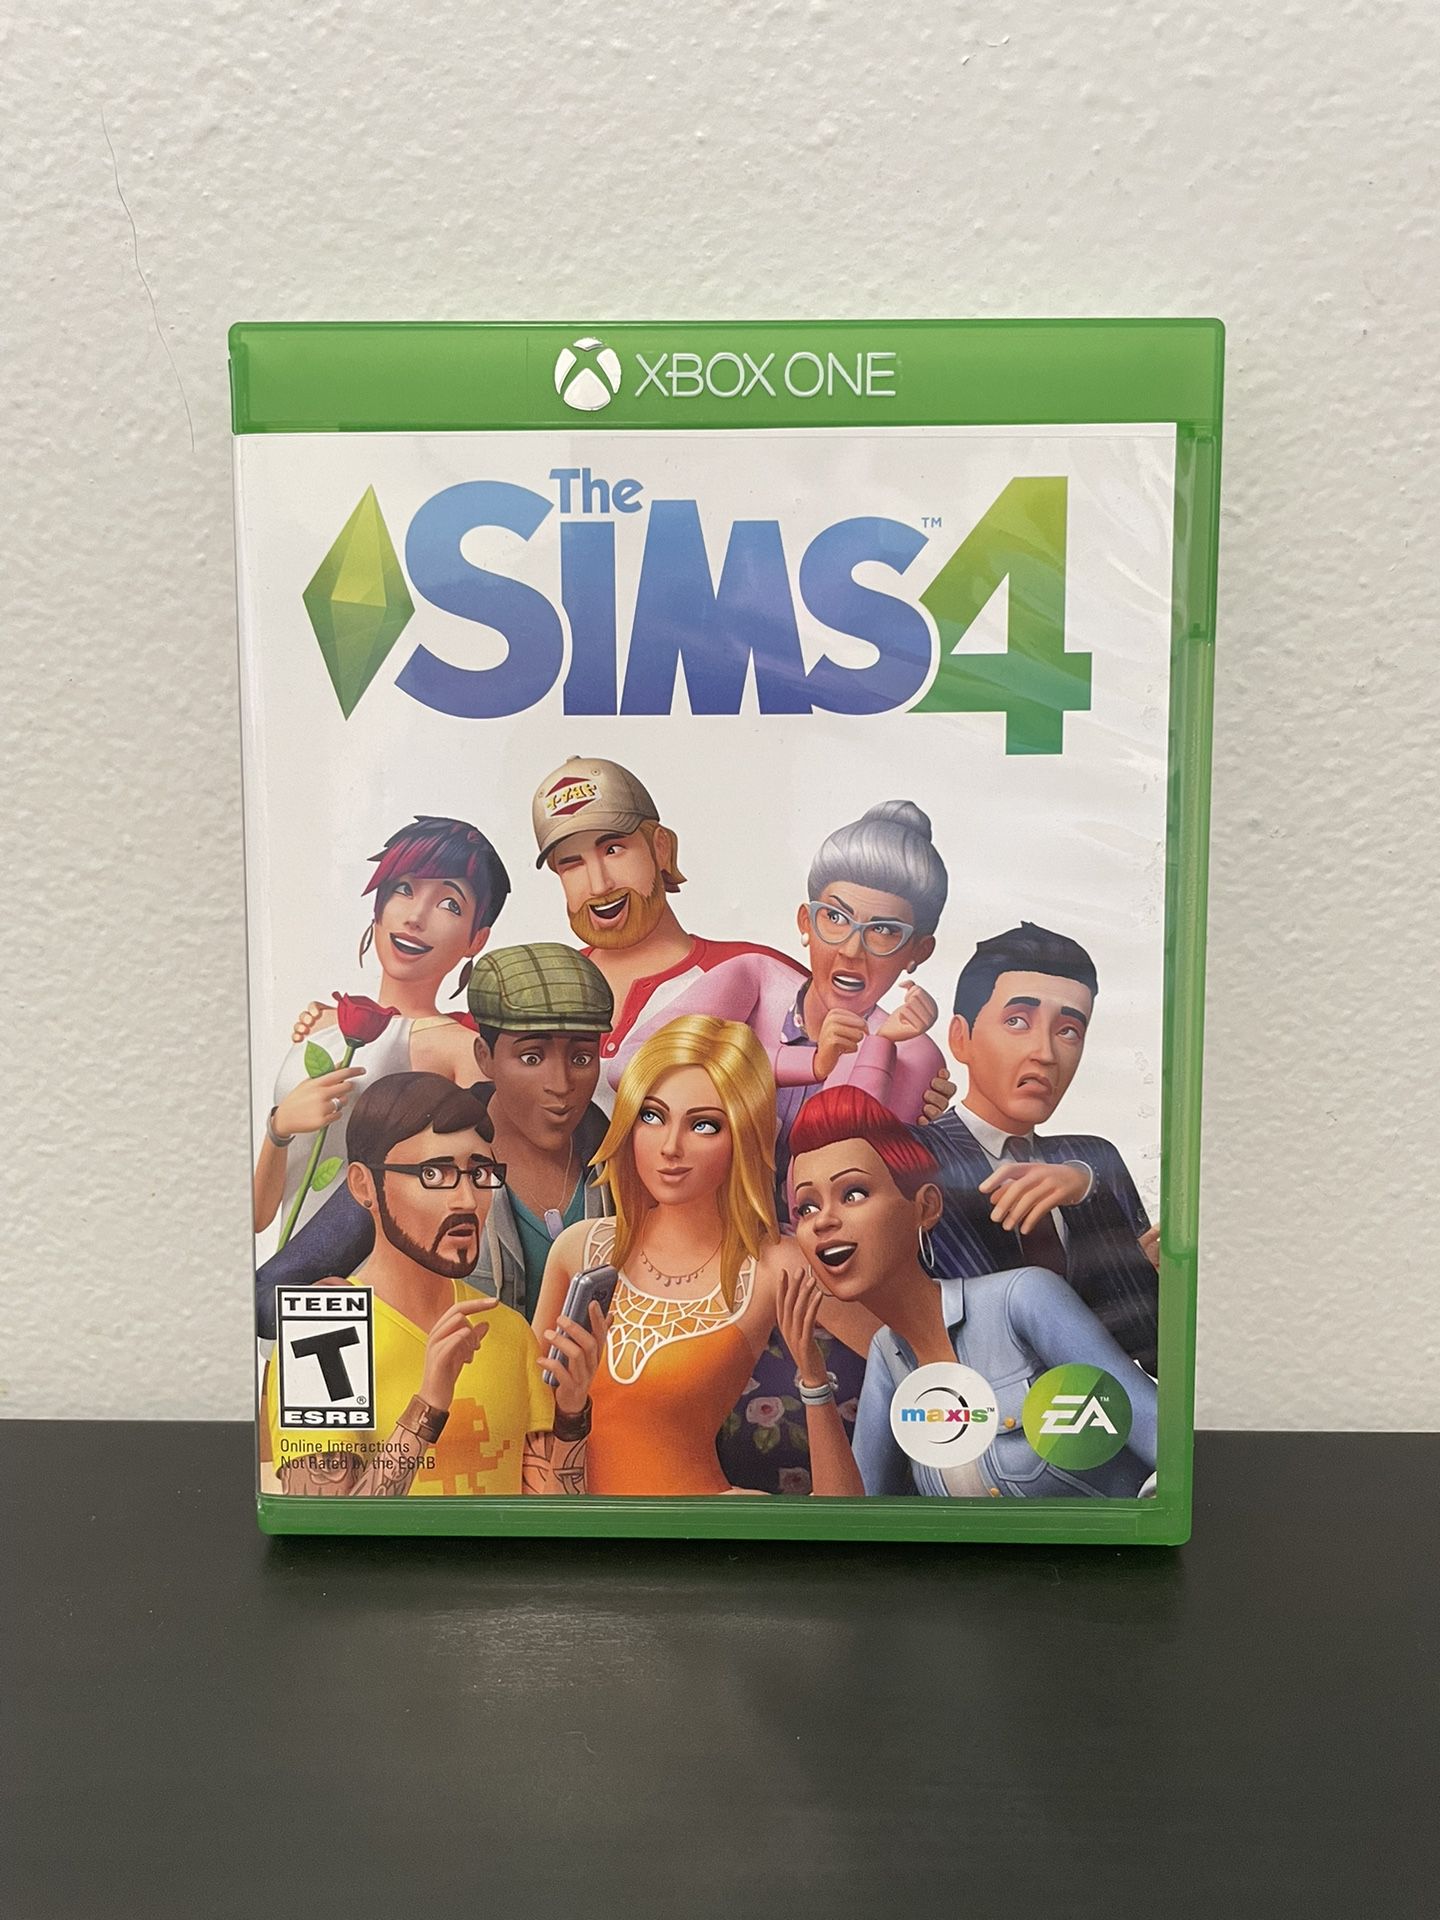 The Sims 4 Xbox One Like New CIB Video Game Microsoft EA